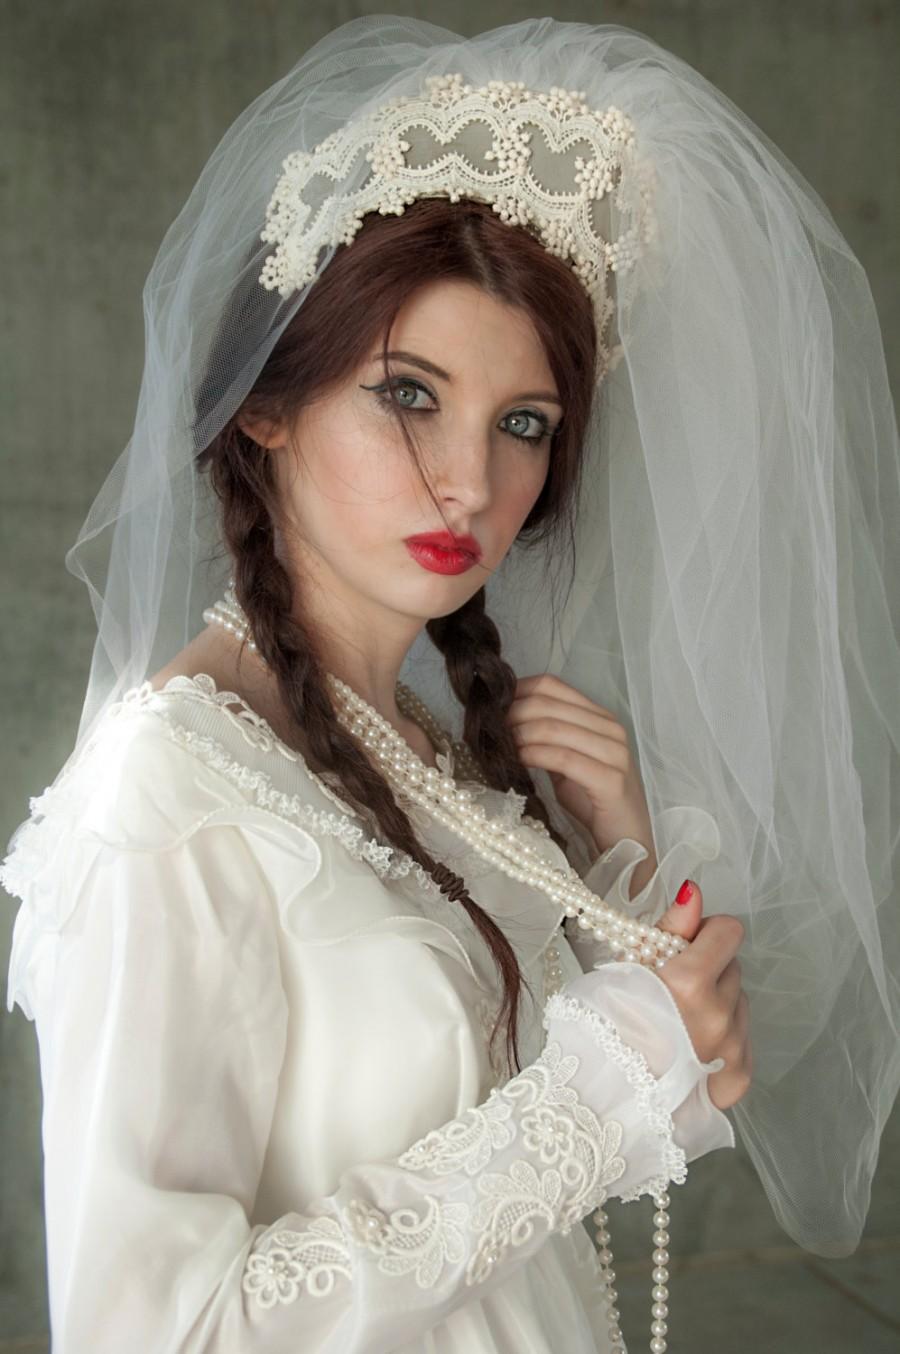 Wedding - Tall wedding veil, white tulle Renaissance-style medieval bridal crown headpiece, 1960s